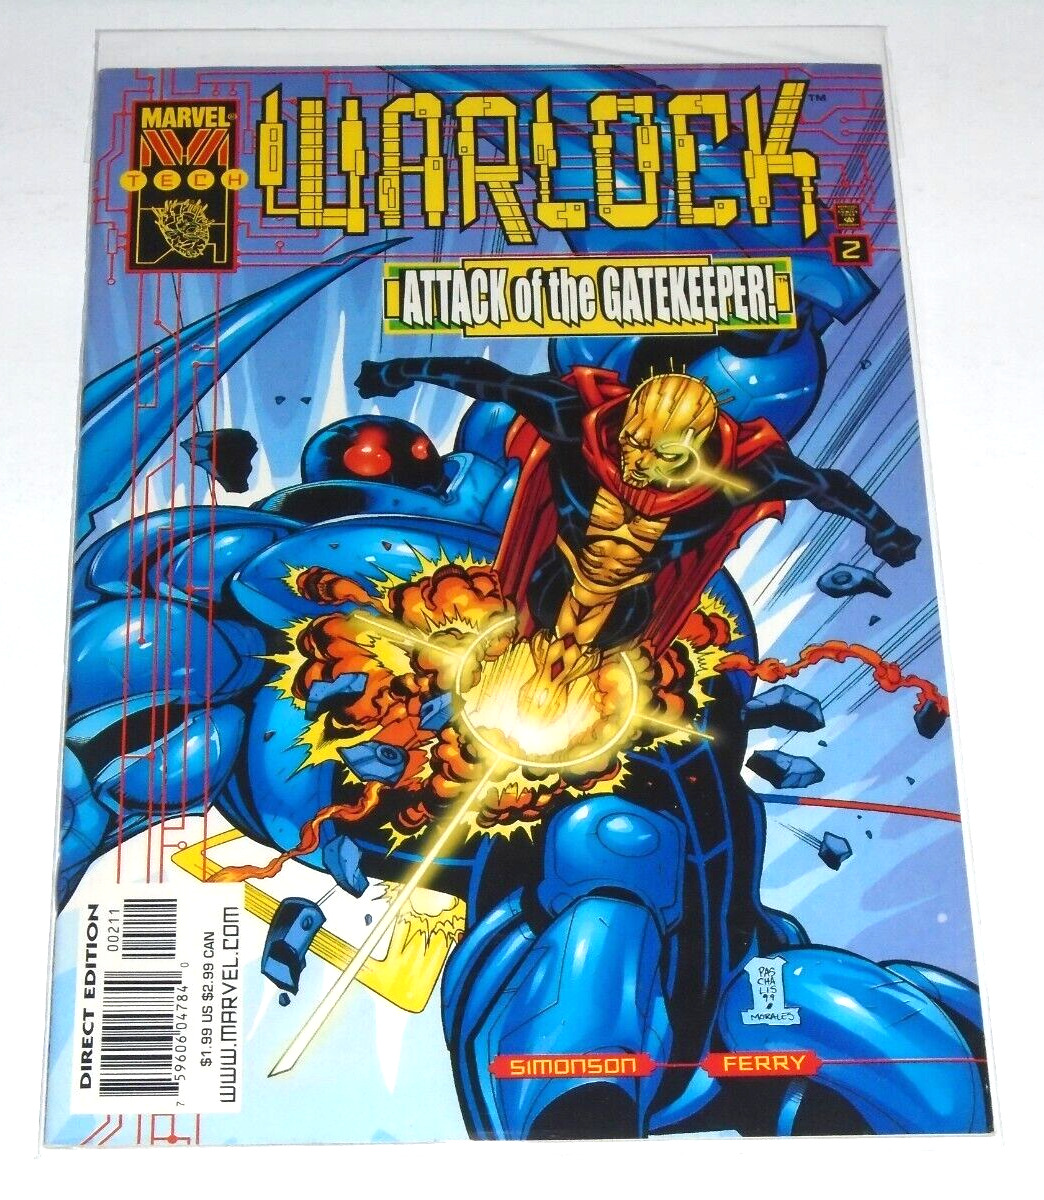 Warlock: Attack of the GateKeeper #2 1999